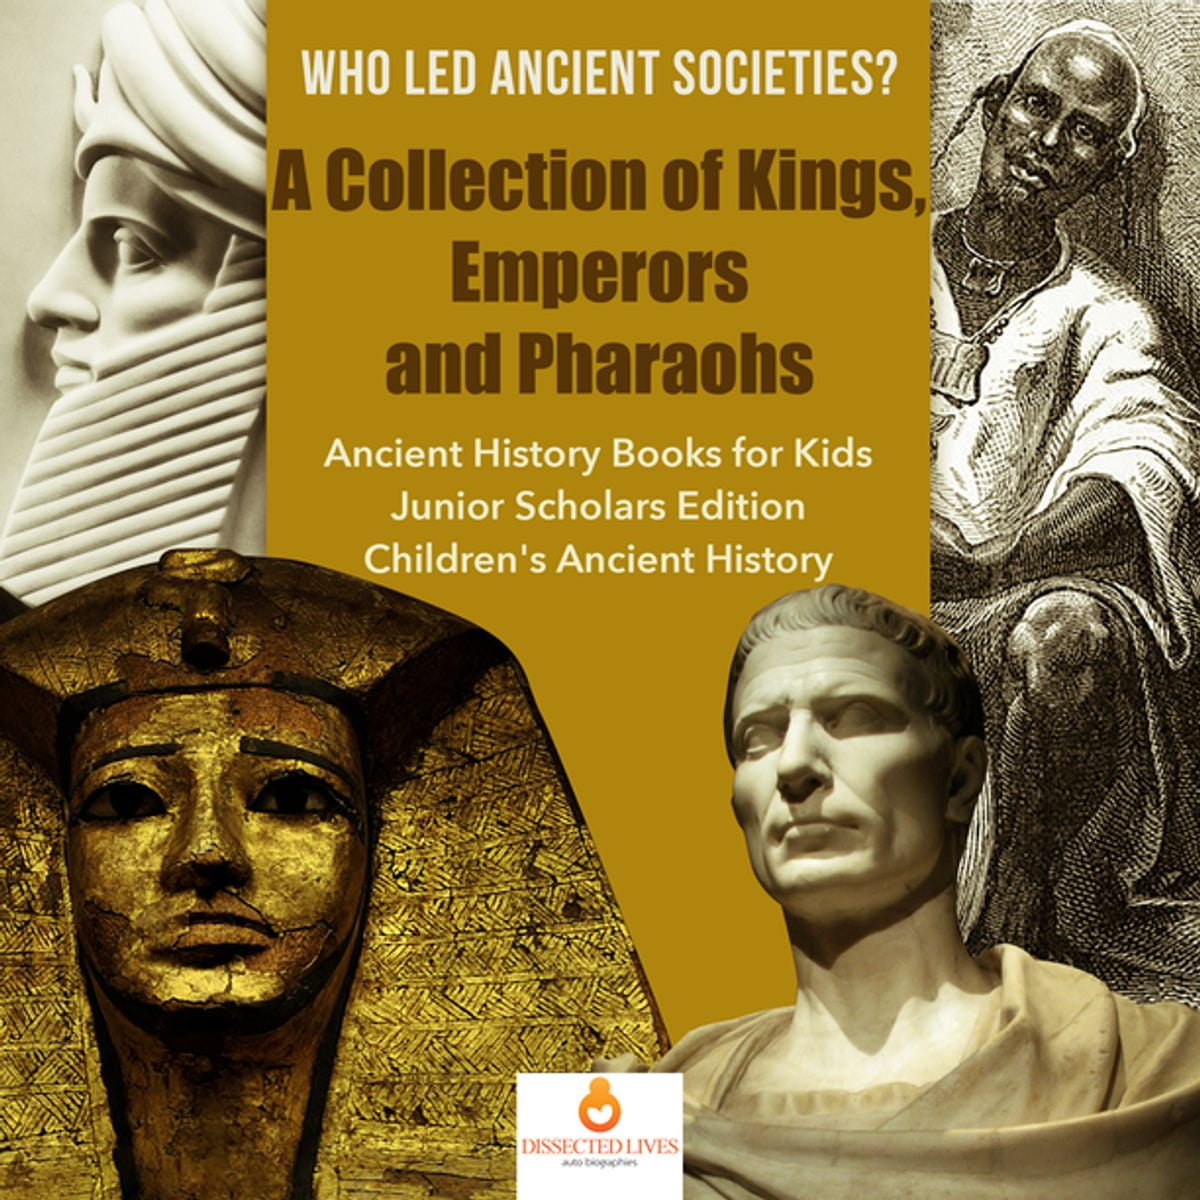 Who Led Ancient Societies? A Collection of Kings,Emperors and Pharaohs ... - 1651774f EbD1 4c5e B13e 10658093483c 1.683478064287e0725cb610aceaa13fac